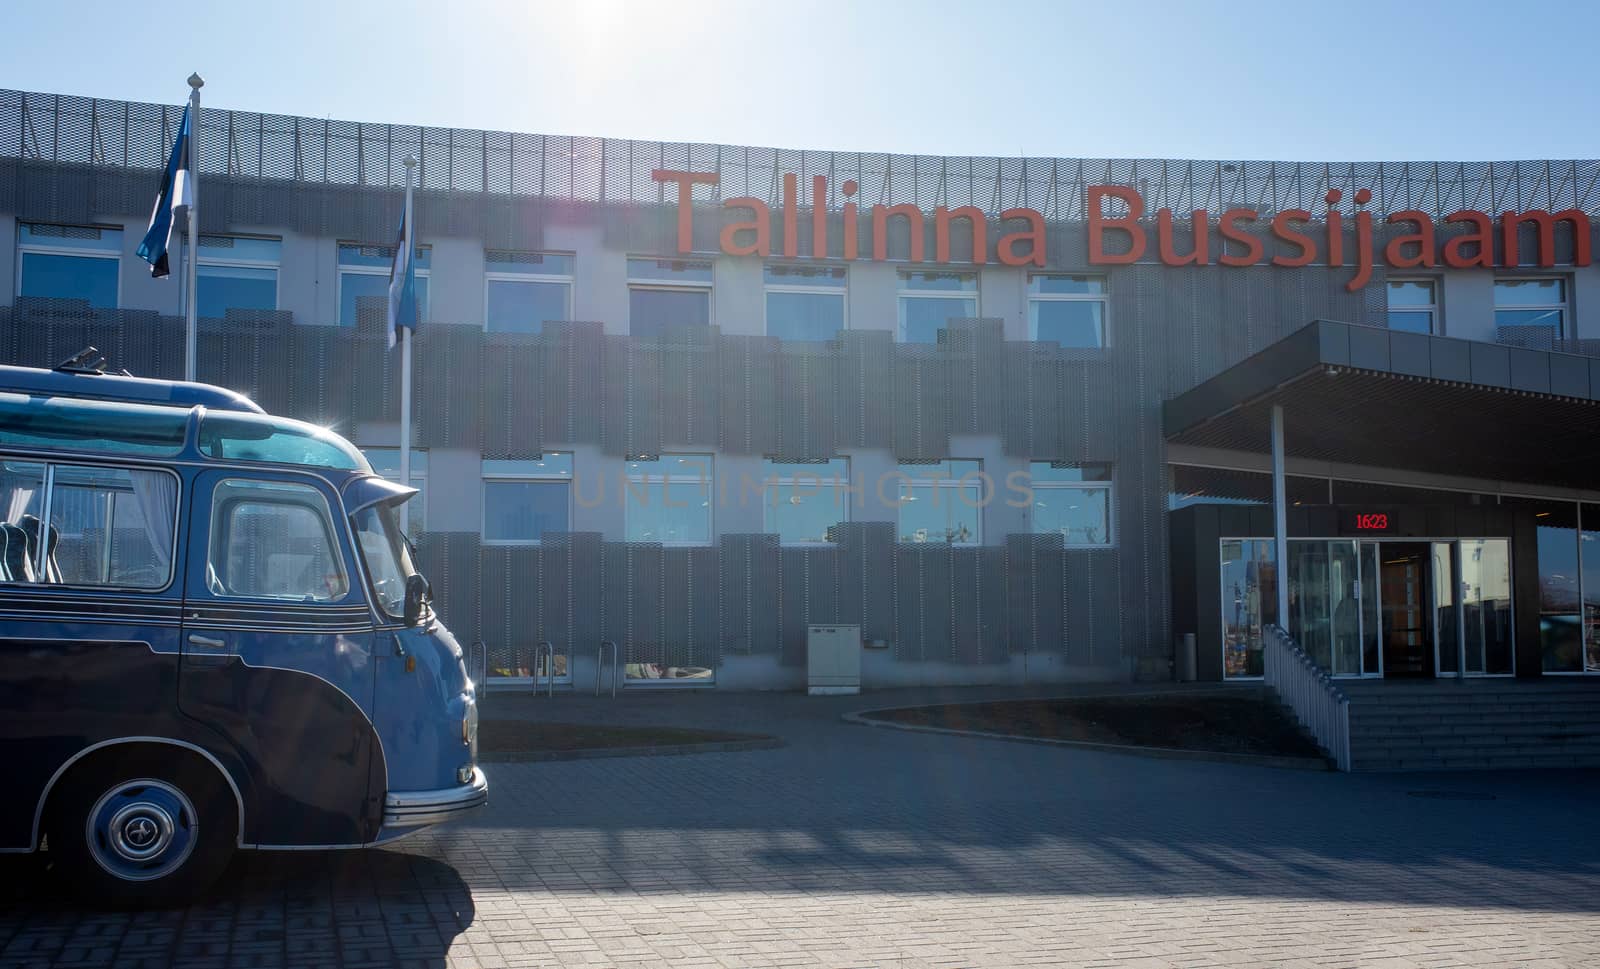 19 April 2018, Tallinn, Estonia. Tallinn bus station building